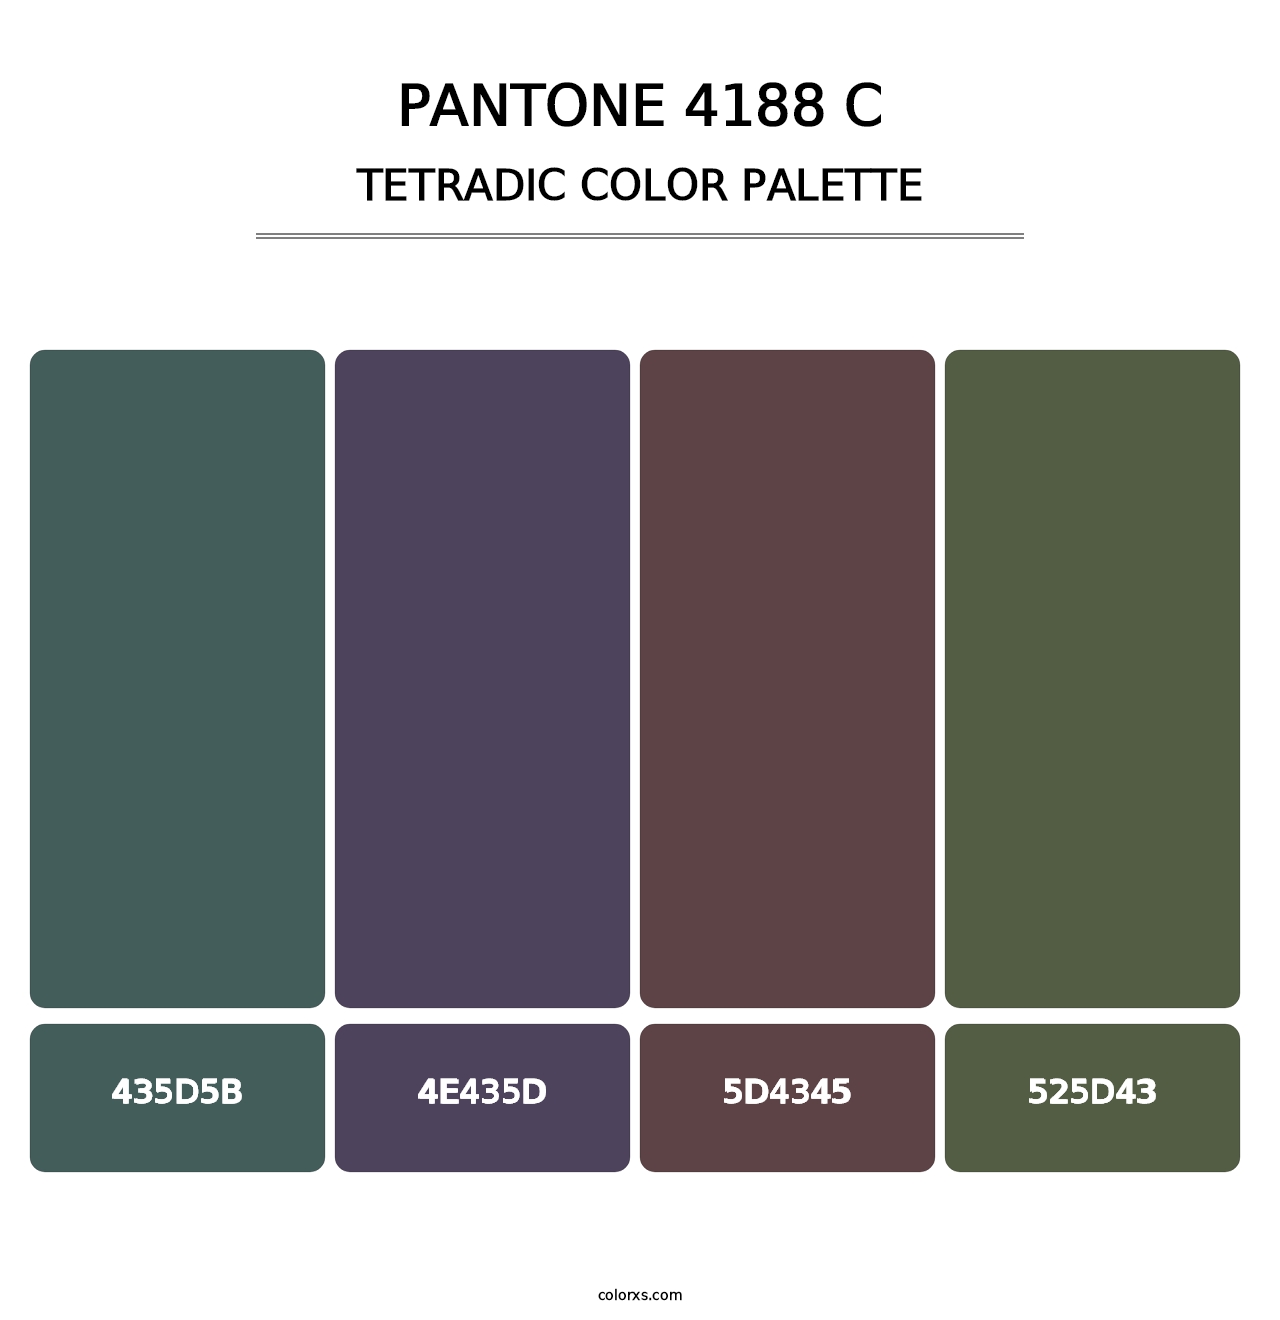 PANTONE 4188 C - Tetradic Color Palette